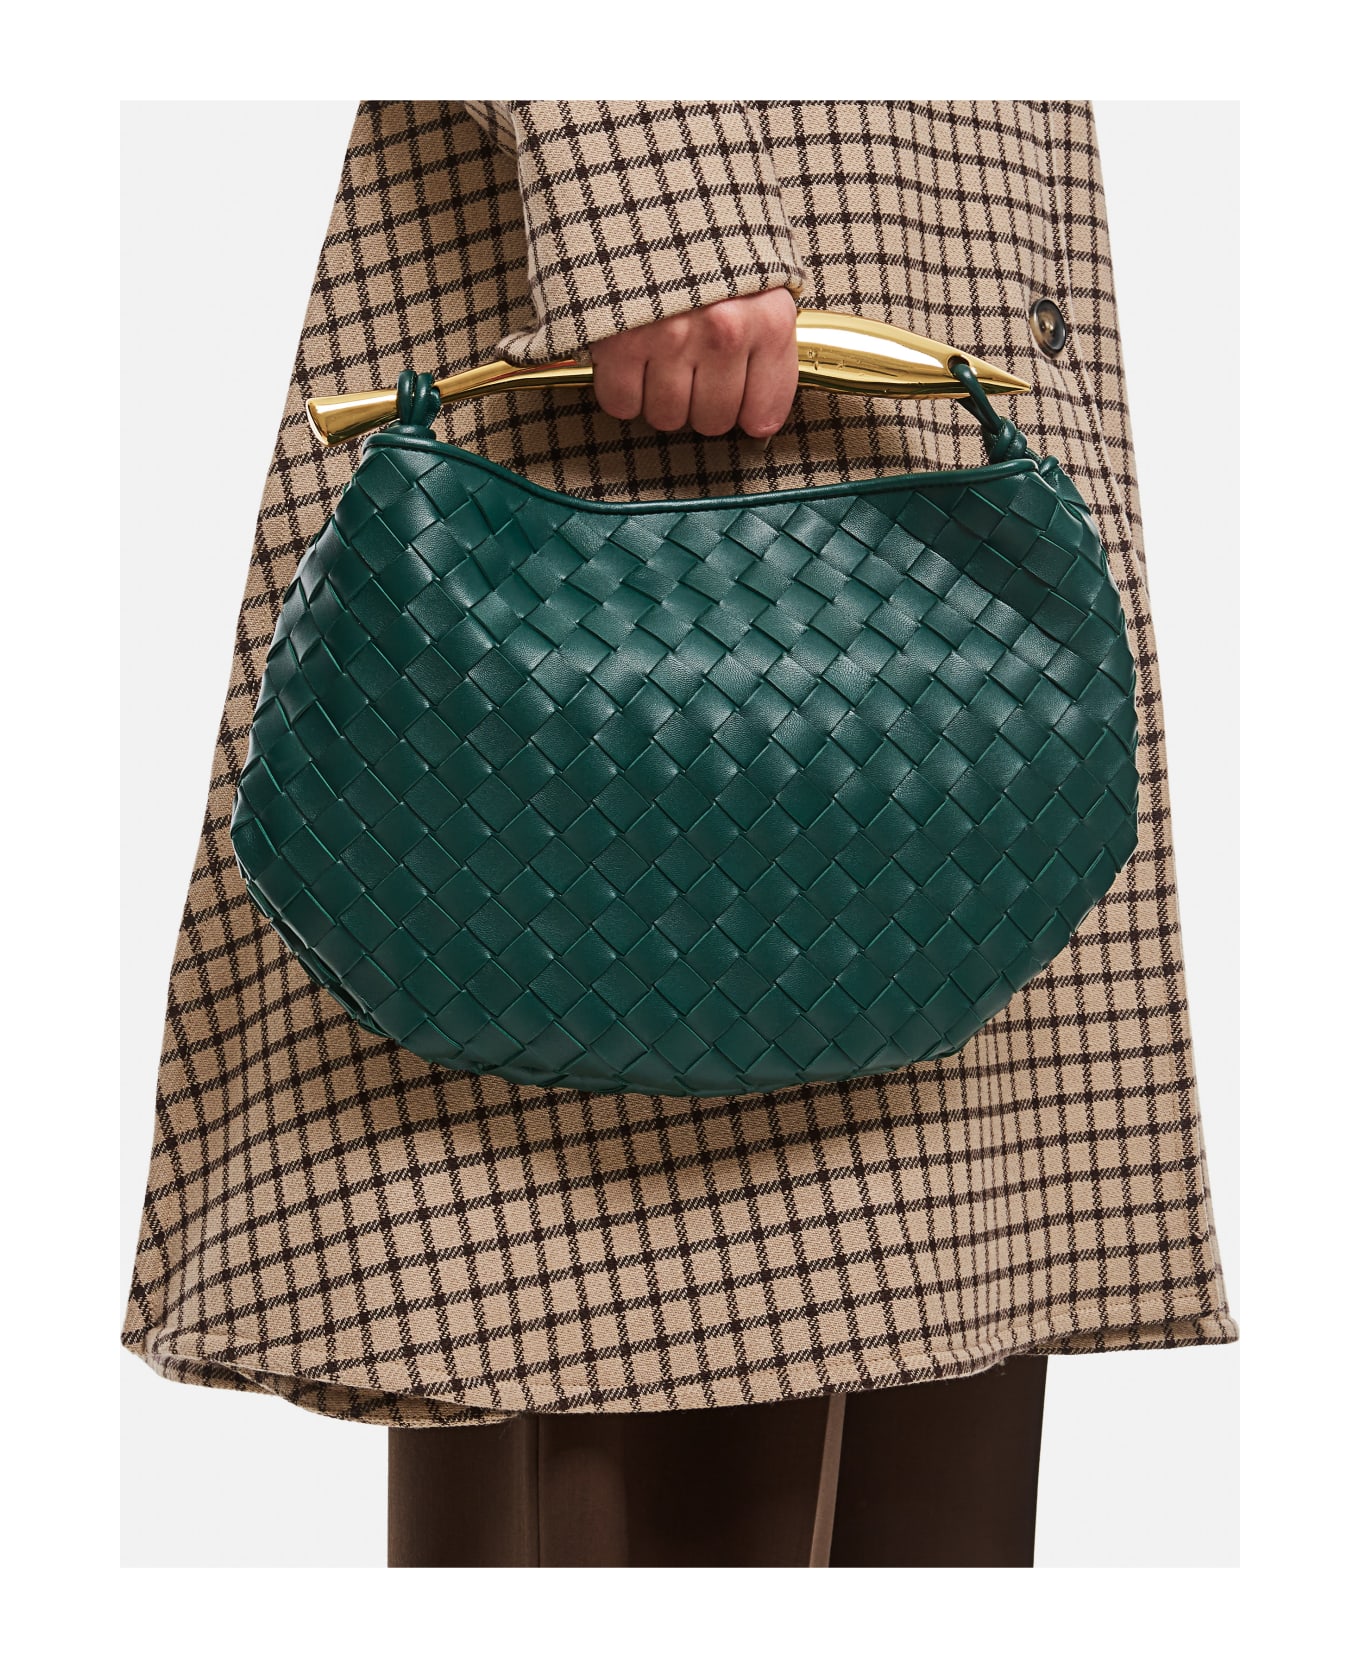 Bottega Veneta Sardine Leather Top Handle Bag - Green